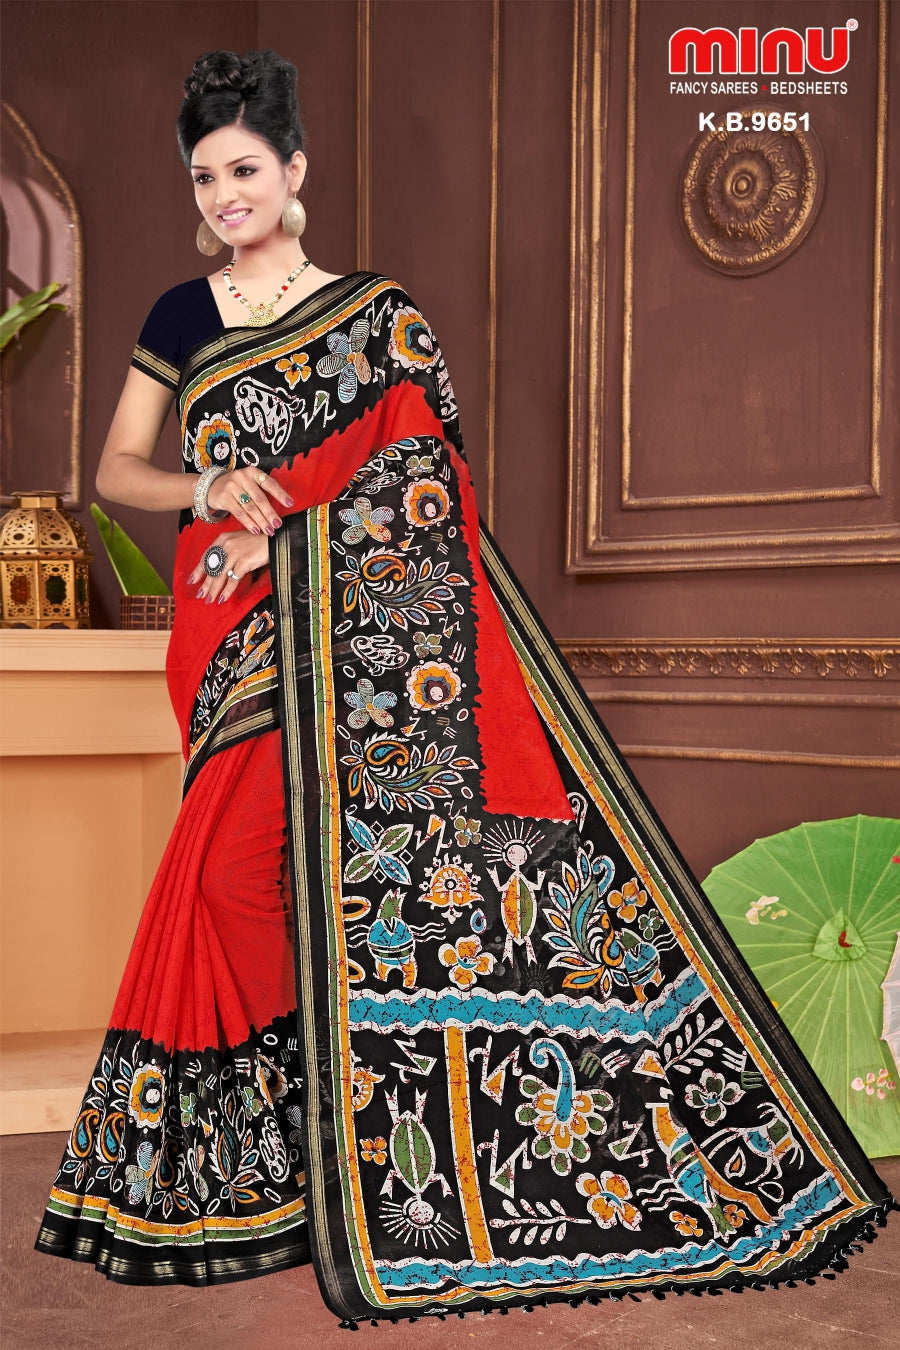 women wearing latest designed fancy saree image